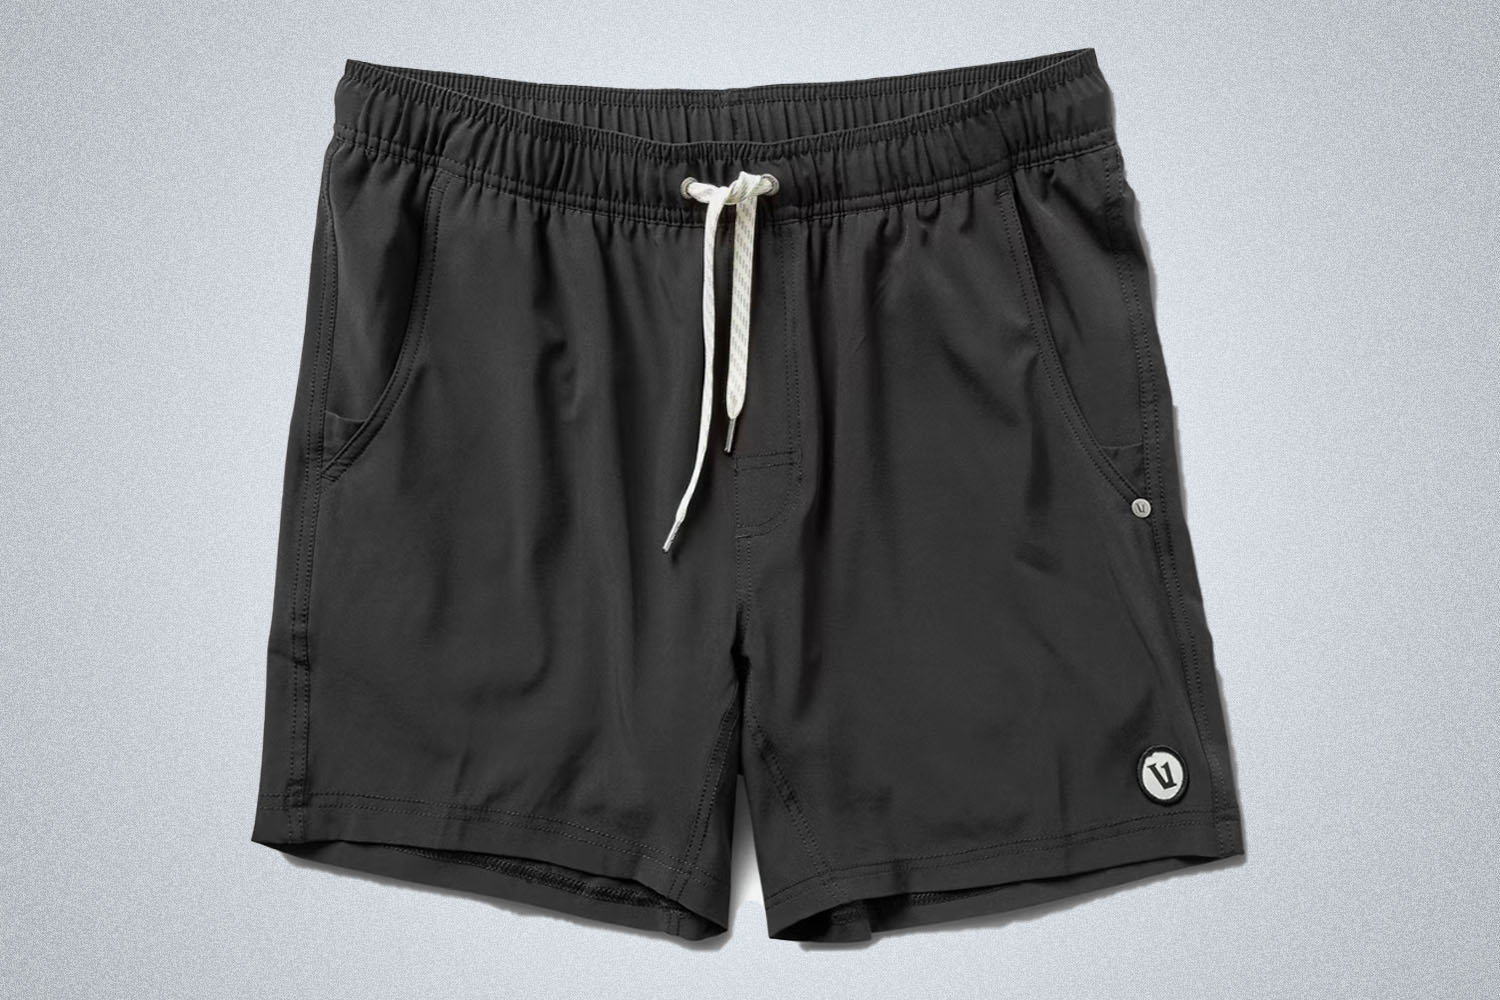 a pair of black Vuori shorts on a grey background